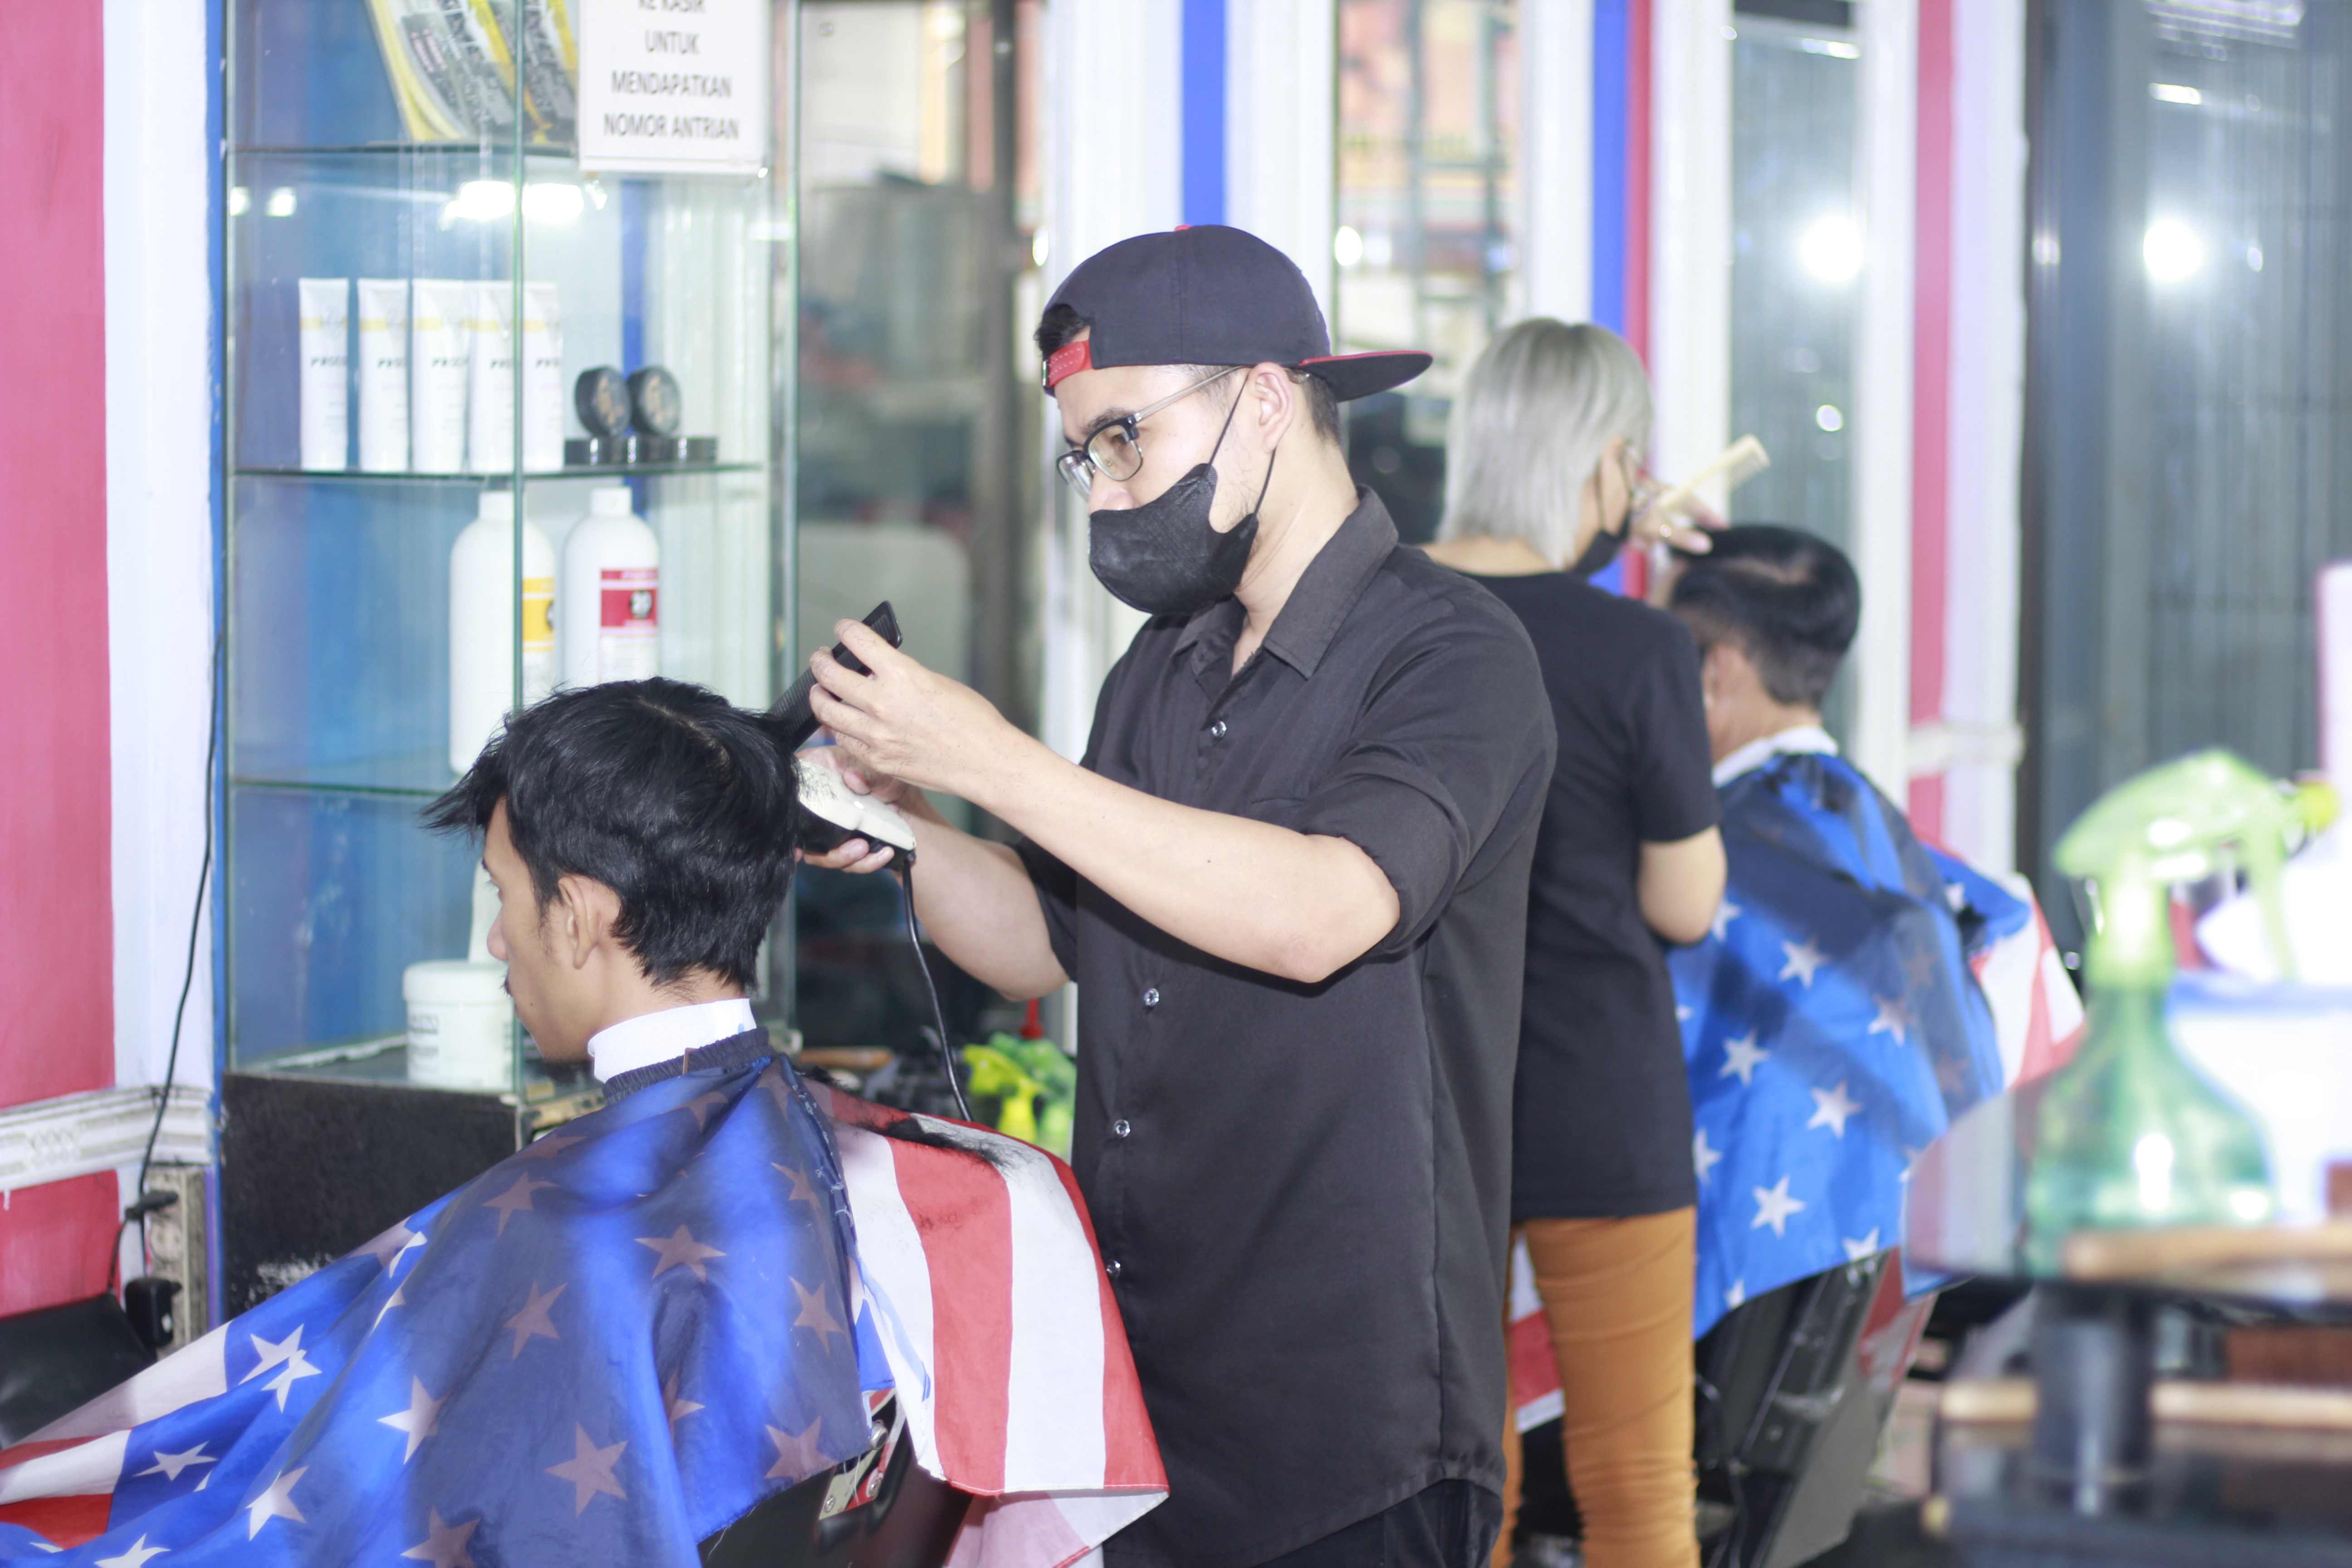 Harga Barbershop Di Kecamatan Lowokwaru Murah